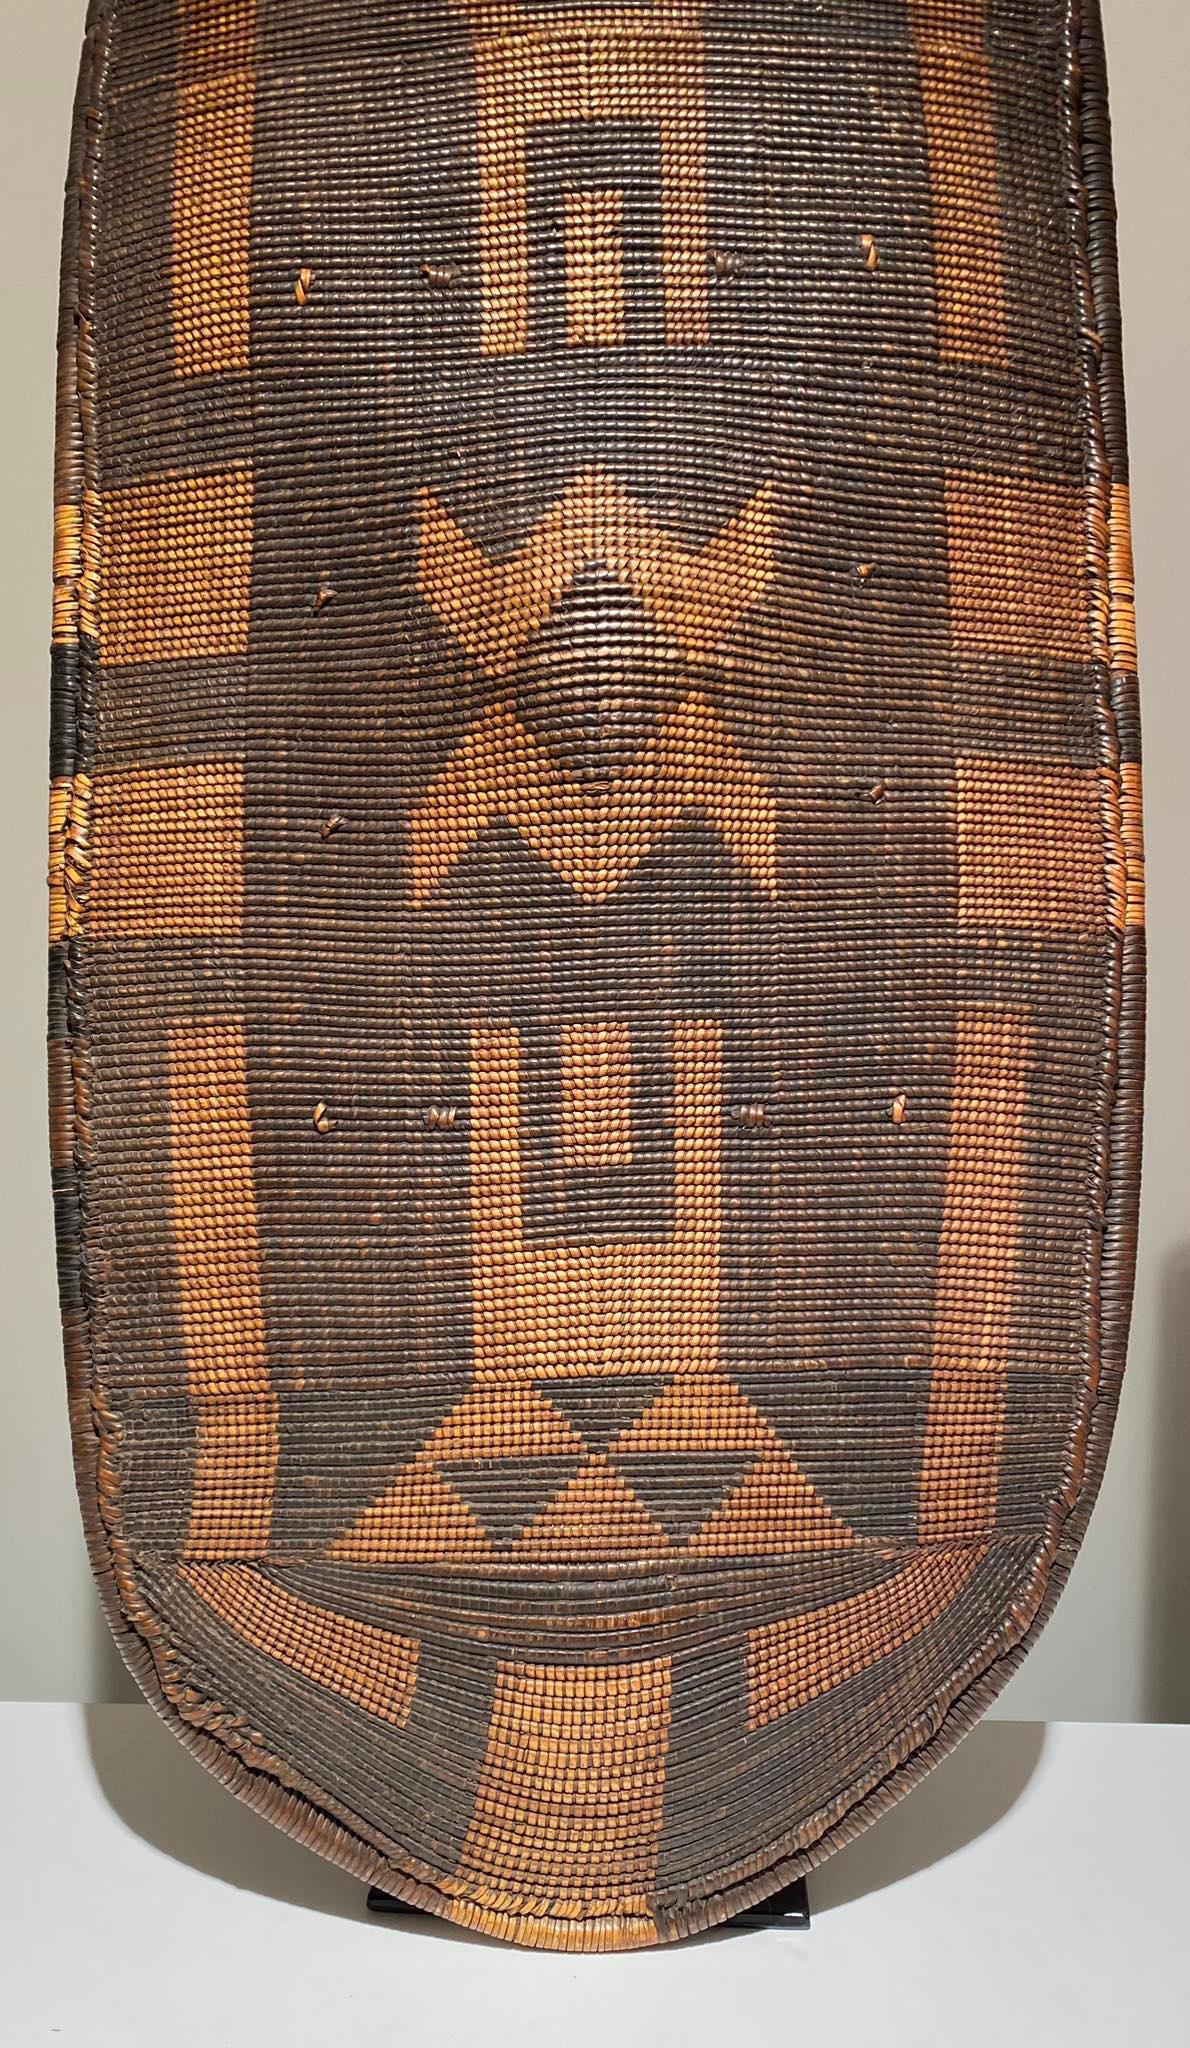 Congolese Gbilija Zande tribe Shield - Nzakara - Dr Congo - 19th Century - African Art For Sale